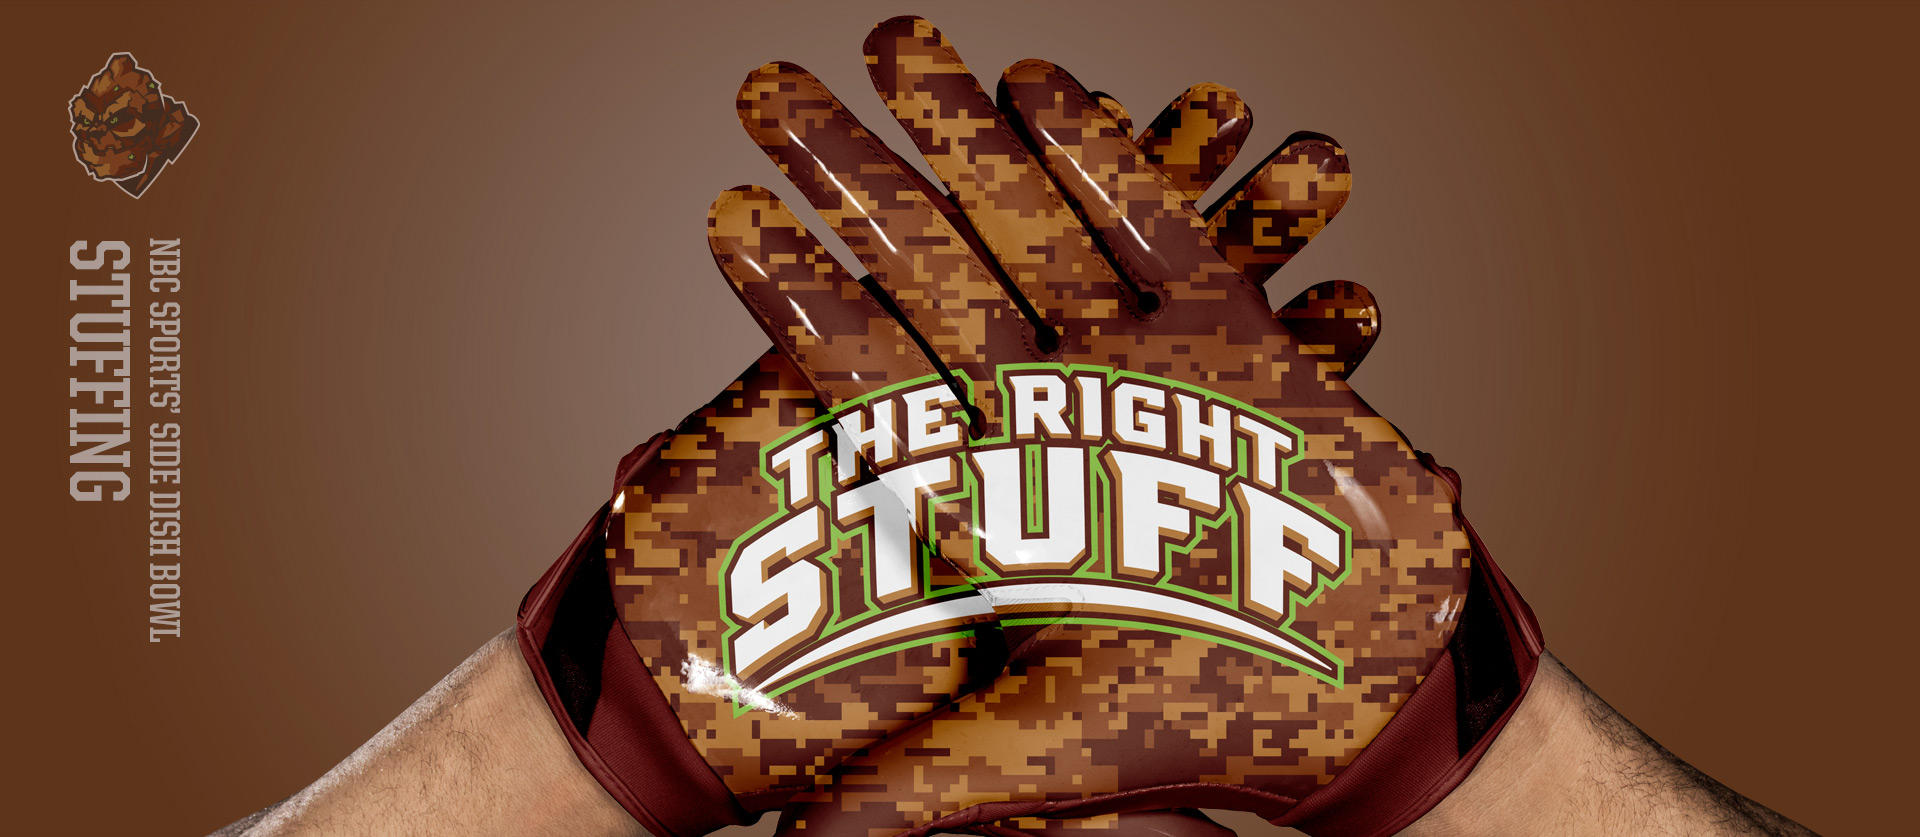 Stuffing Gloves - Football Uniform Design for NBC Sports Thanksgiving Side Dish Bowl